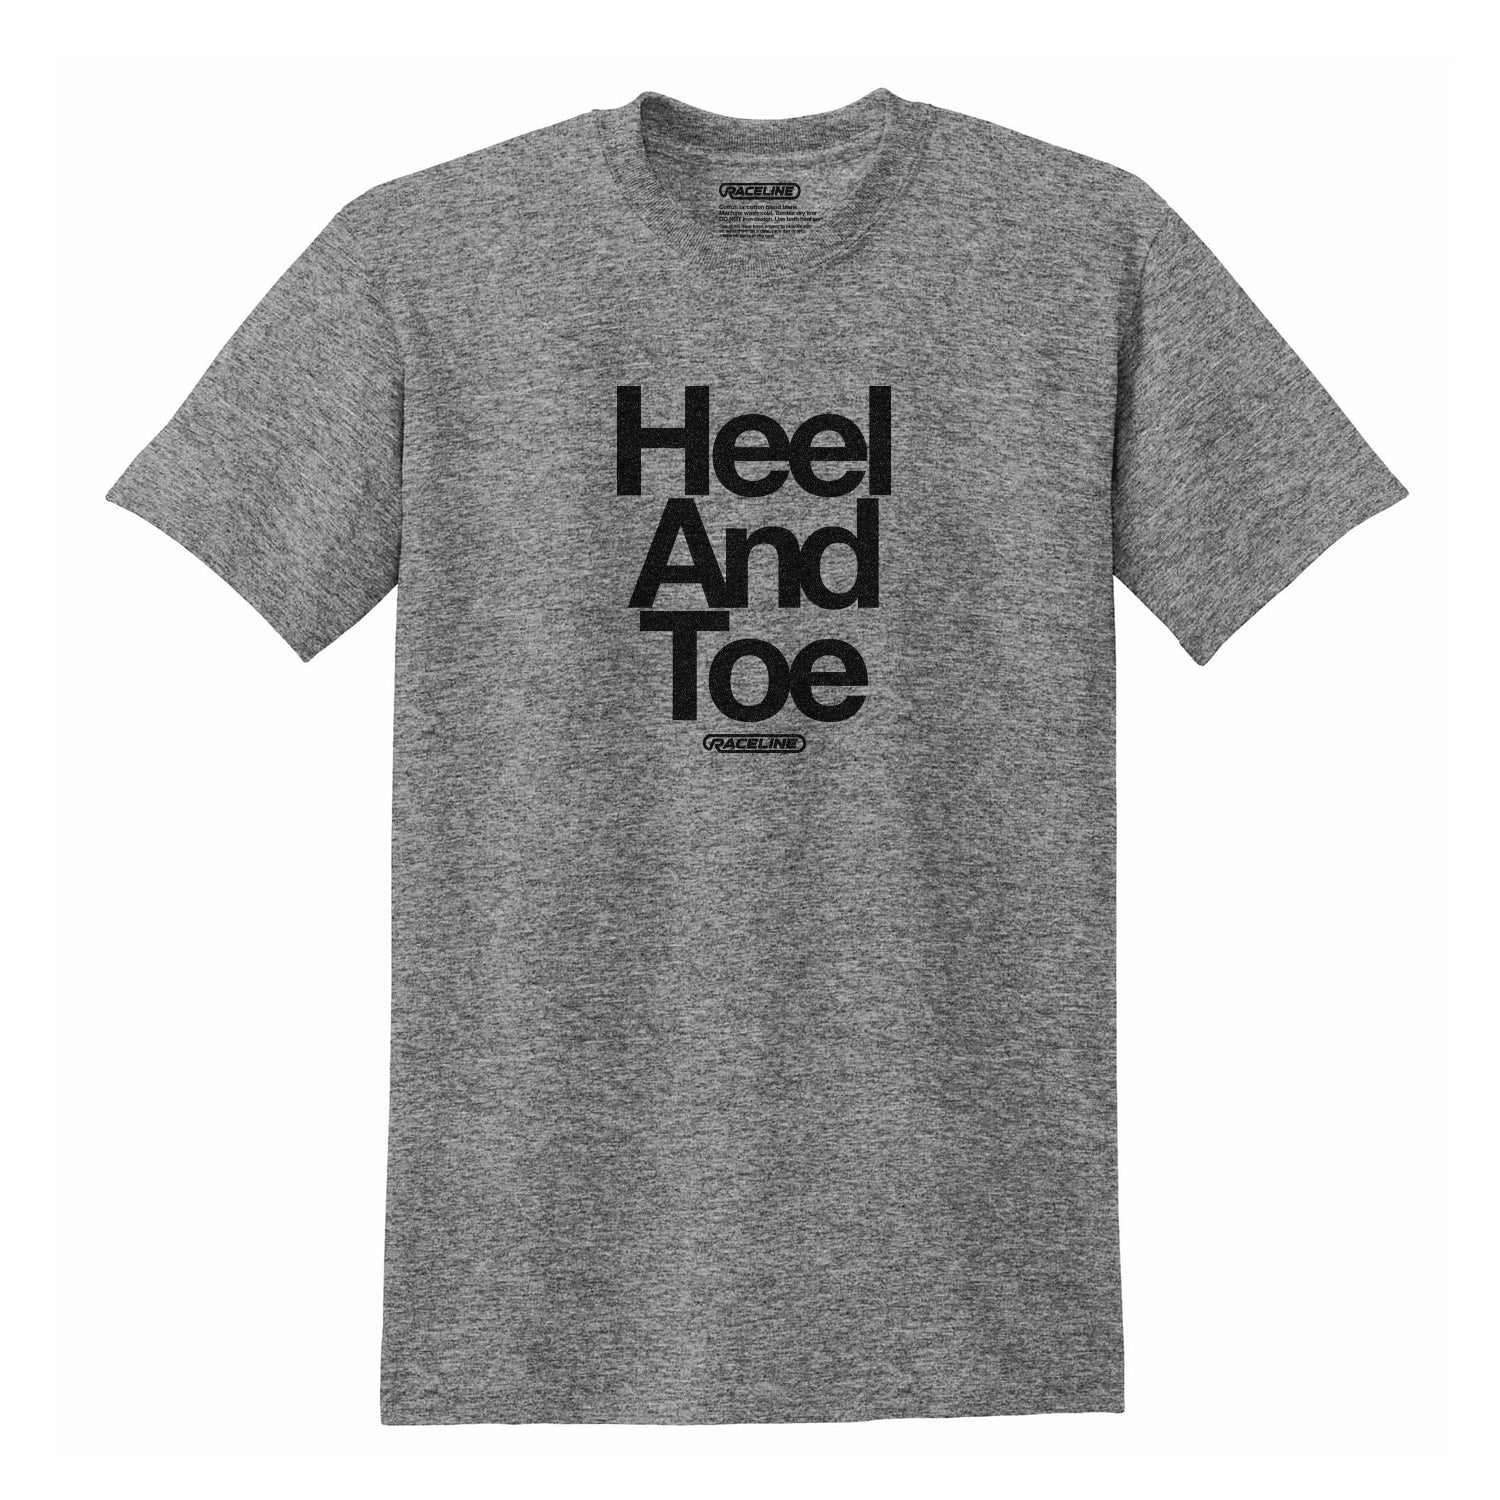 Heel & Toe t-shirt (Launch Edition)